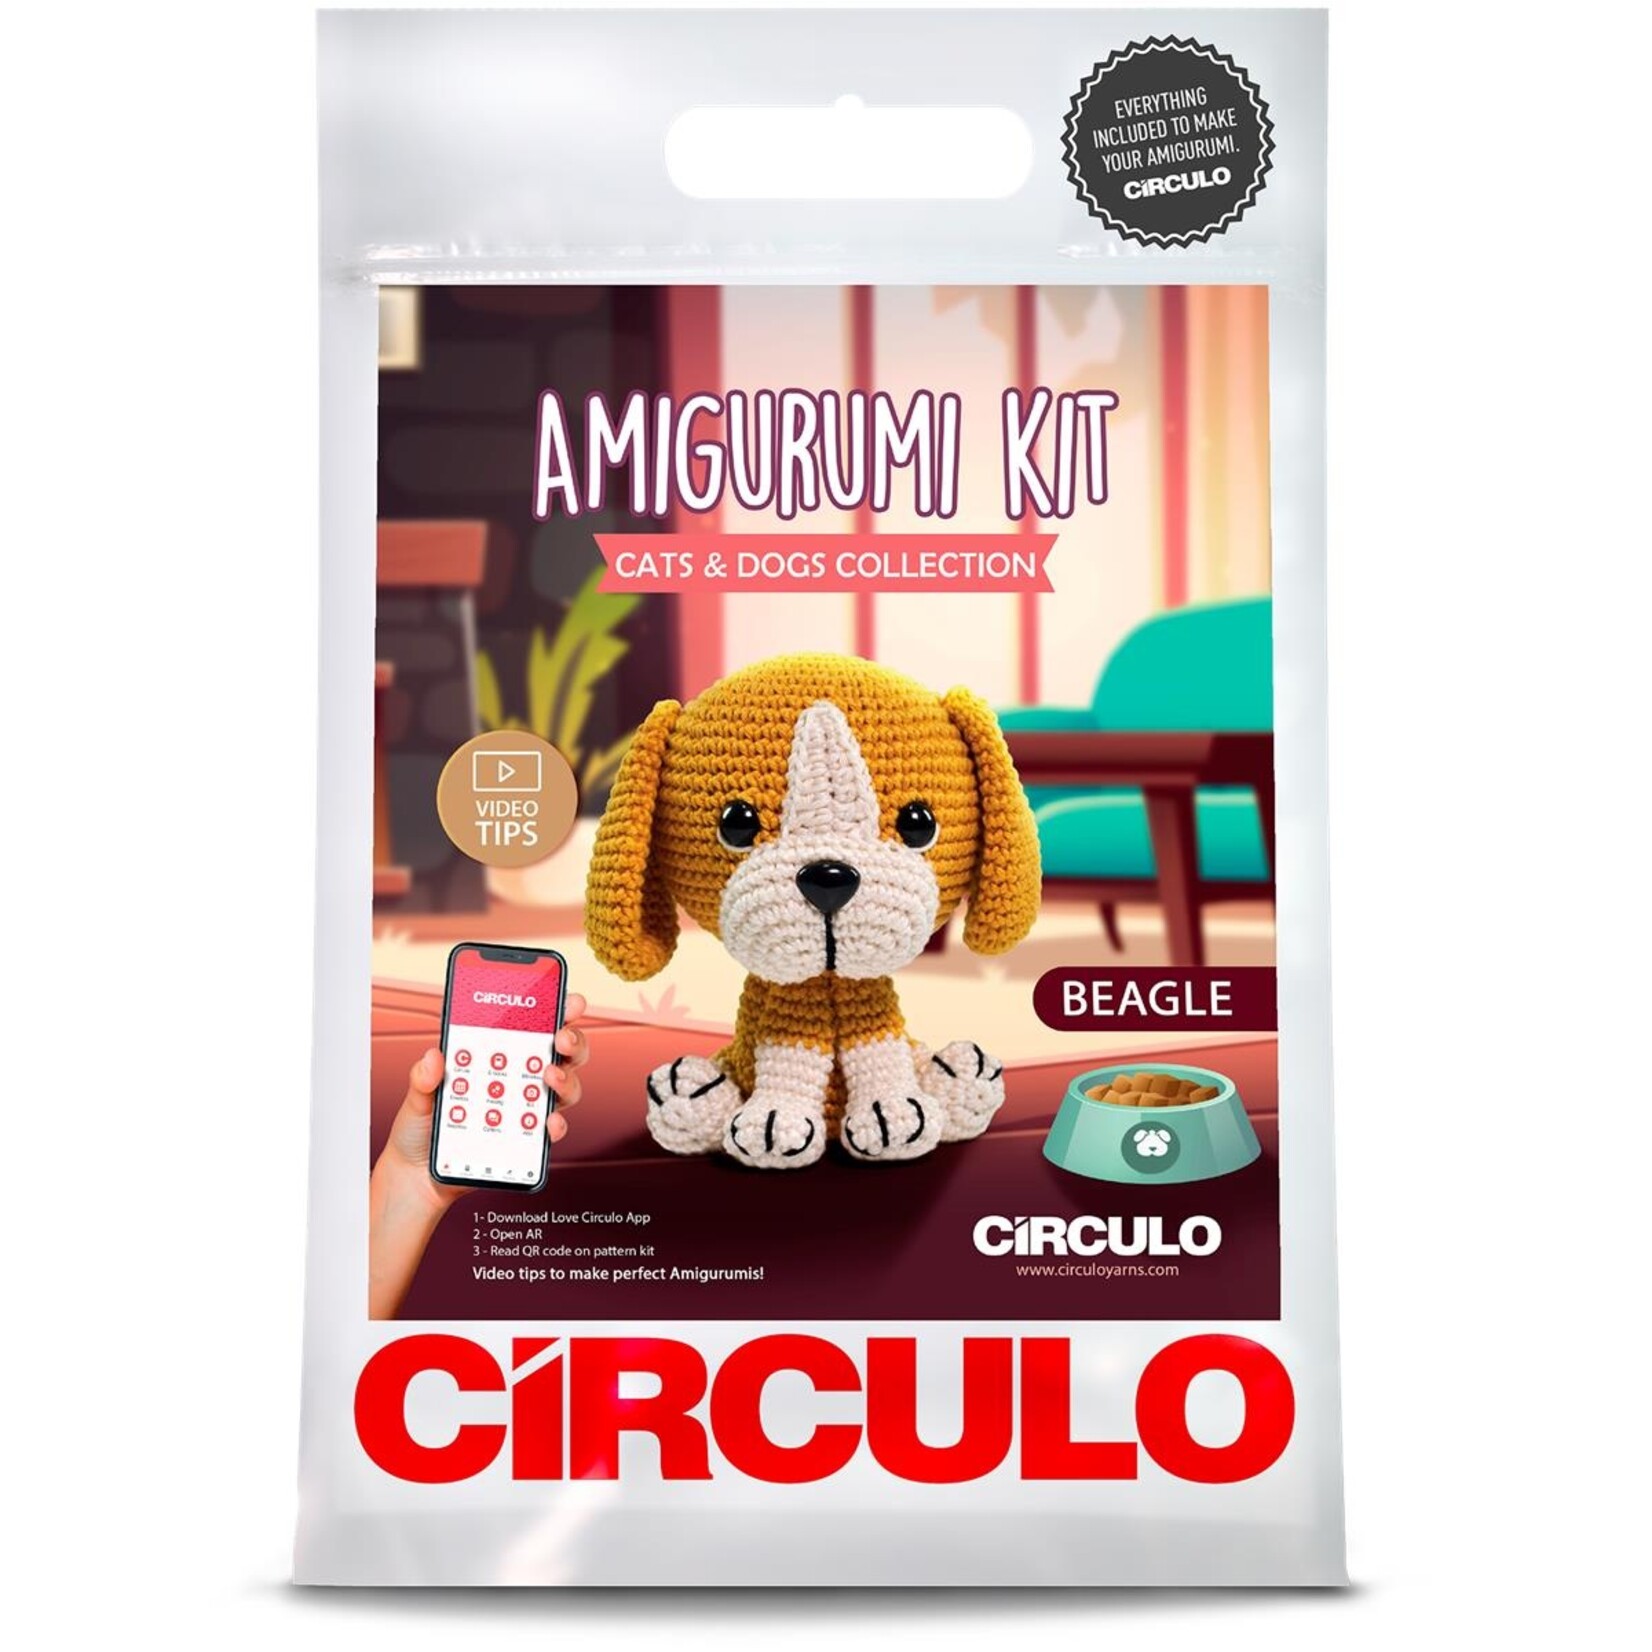 Circulo Amigurumi Kit: Cats and Dogs